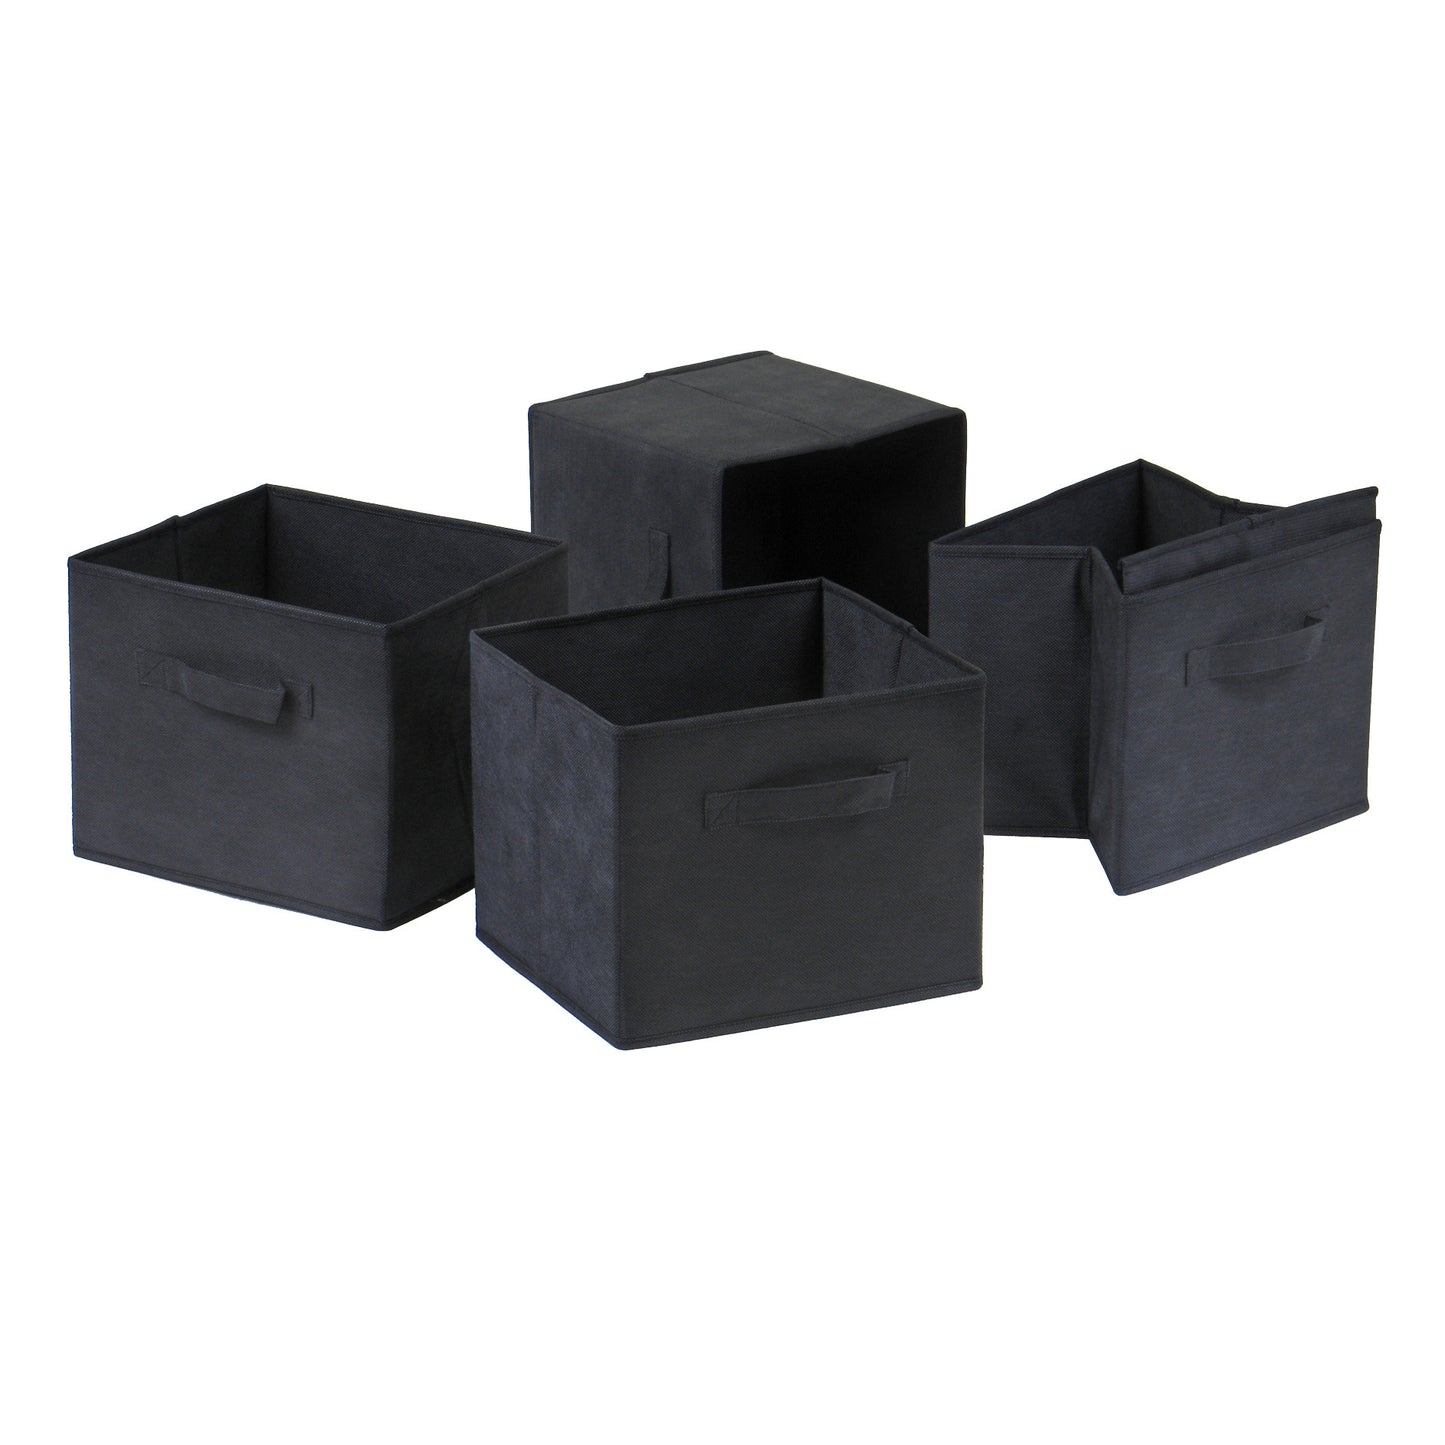 Capri Set of 4 Foldable Black Fabric Baskets